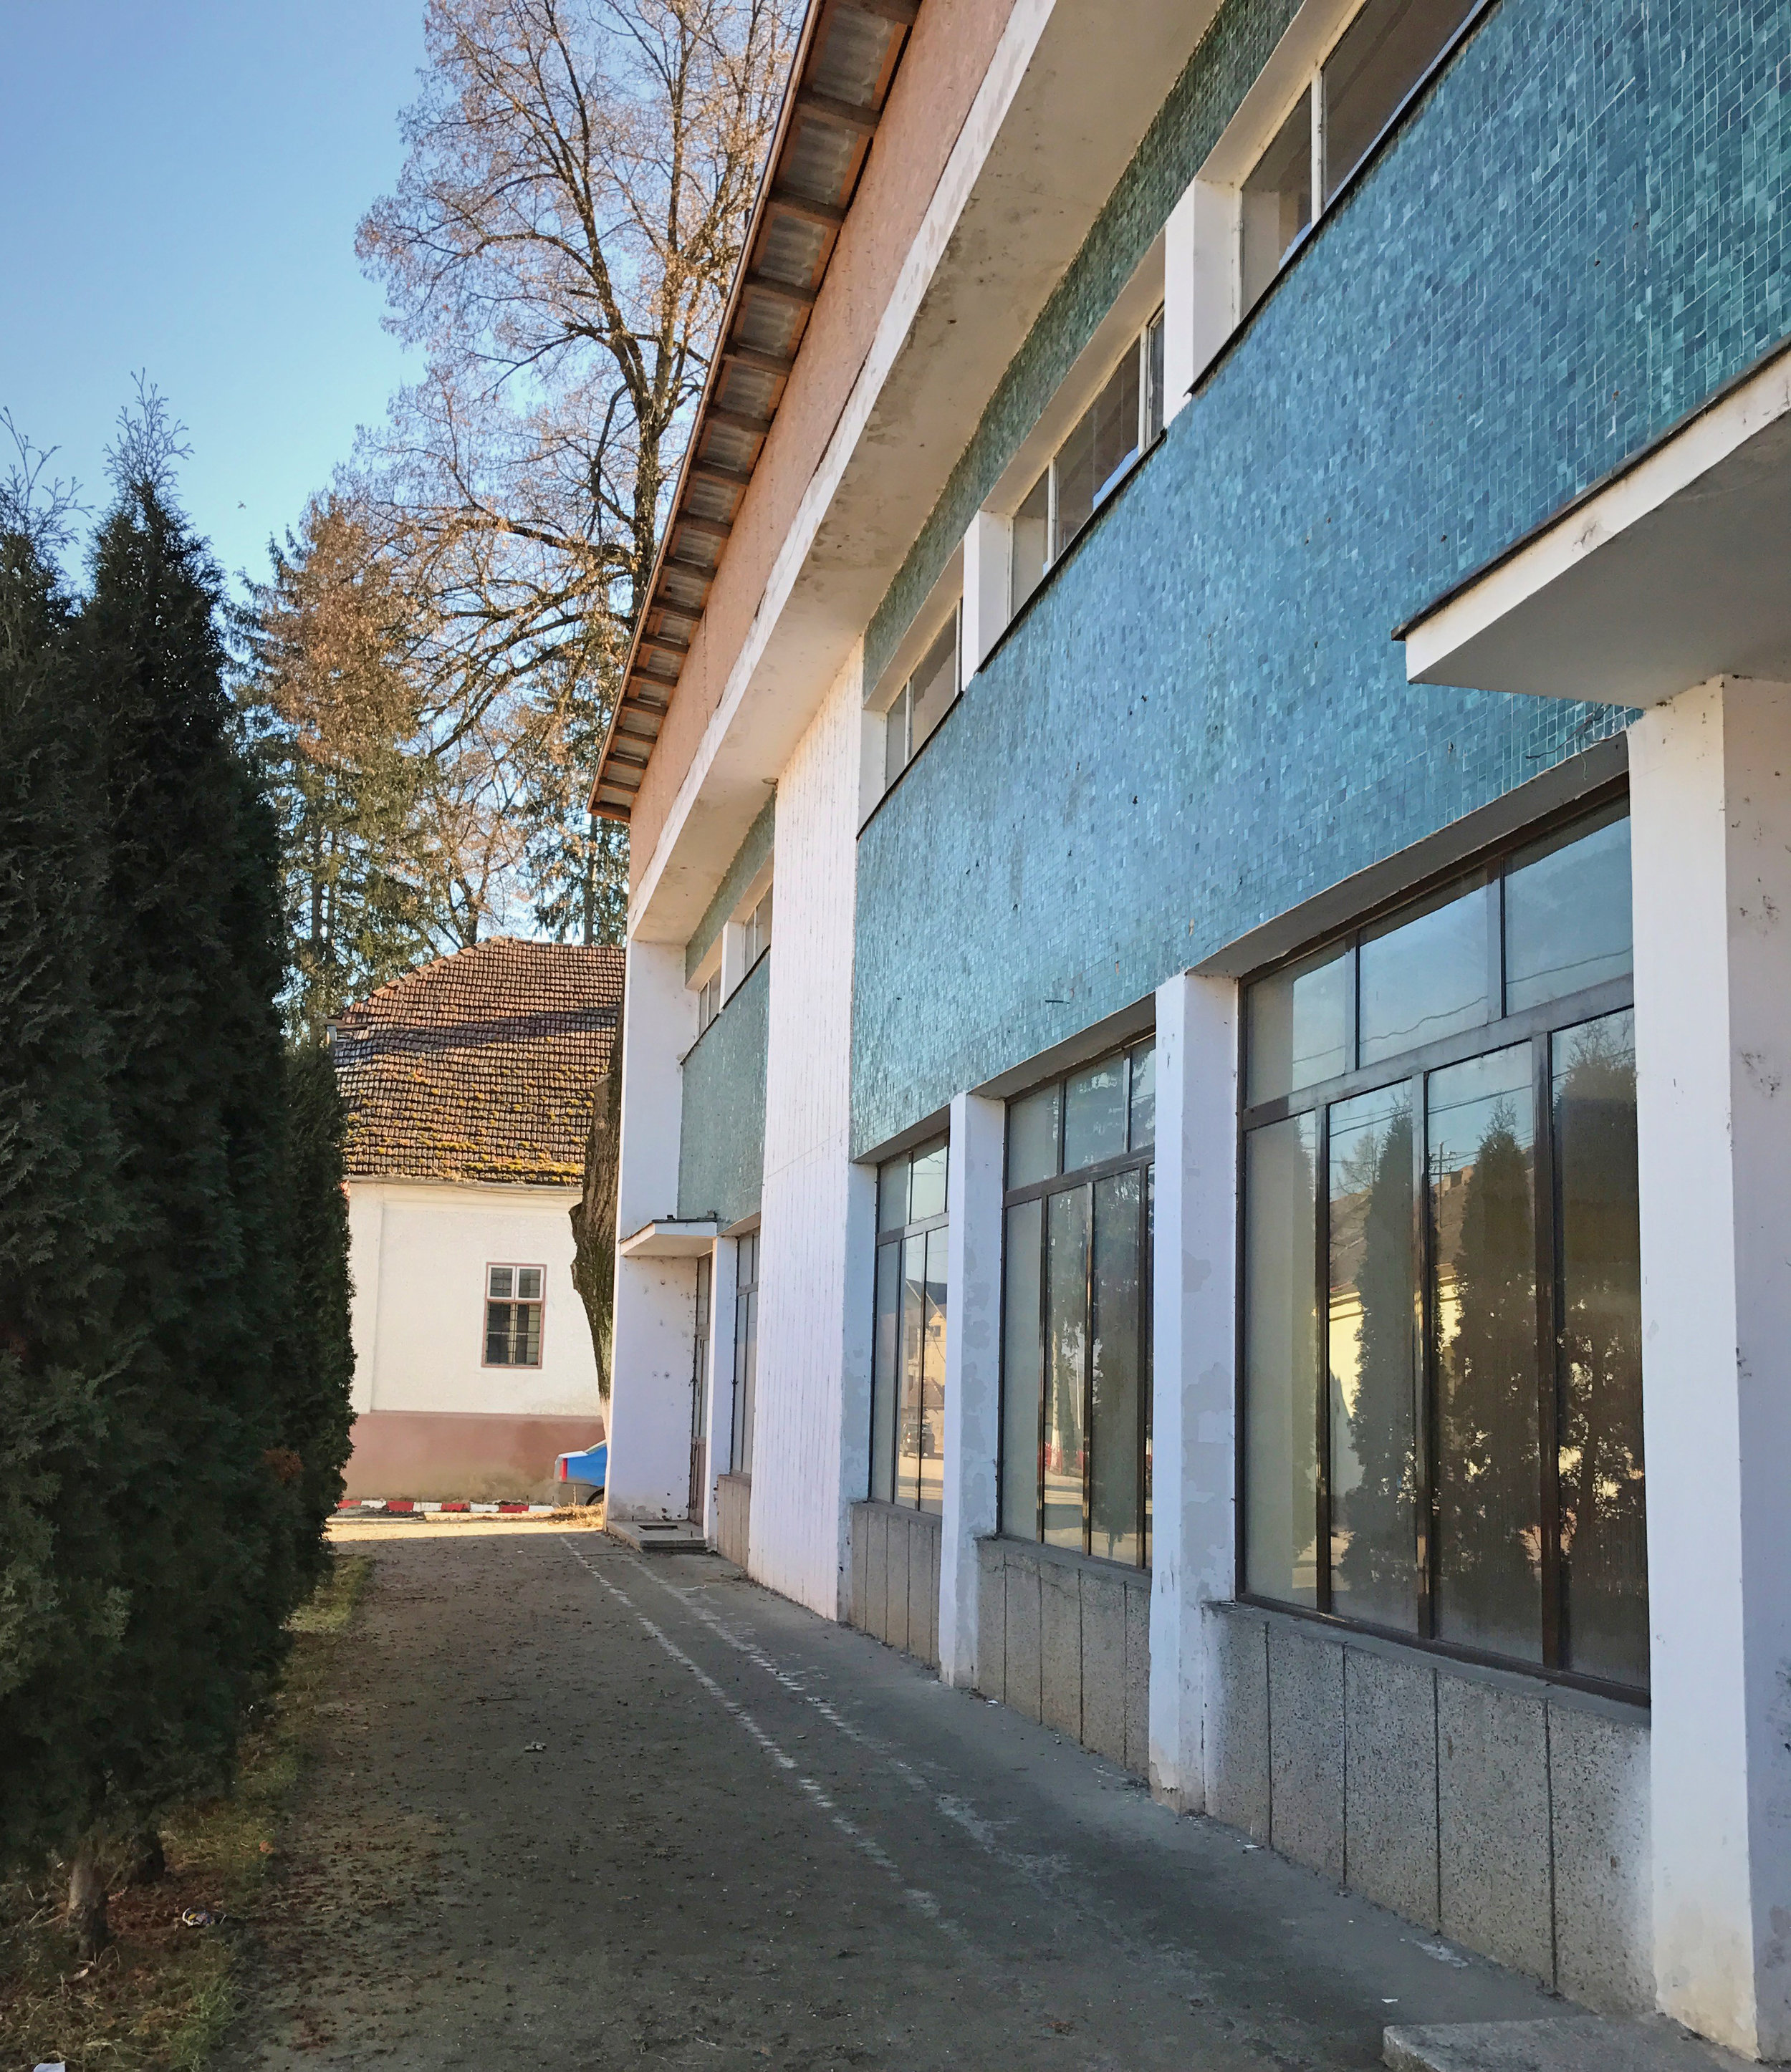 Muzeul Textilelor. Building B, currently under renovation